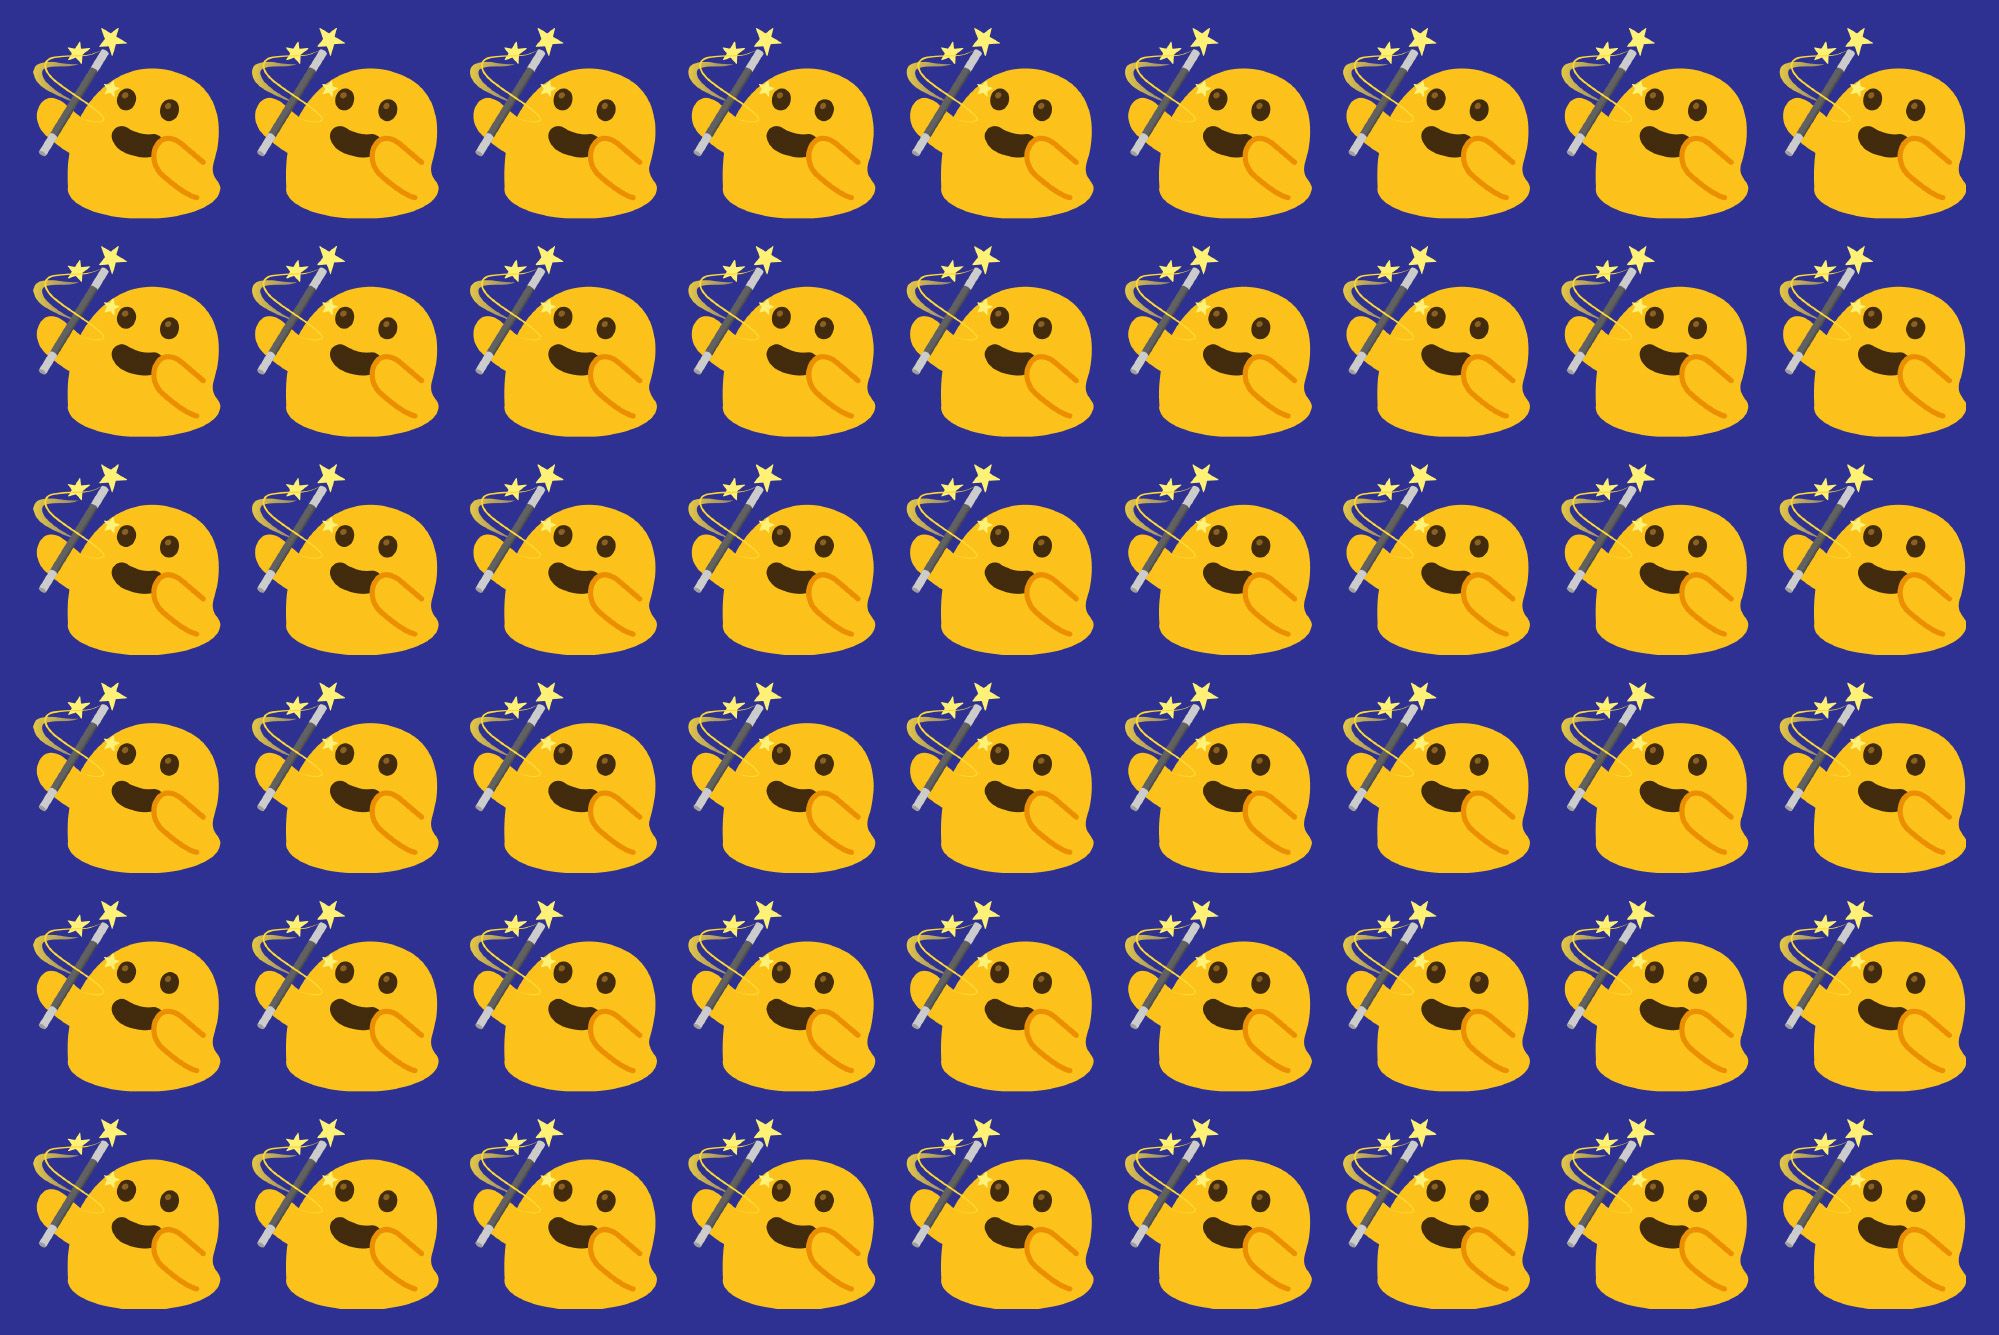 Emoji Kitchen beta magics back the Blobs 🪄